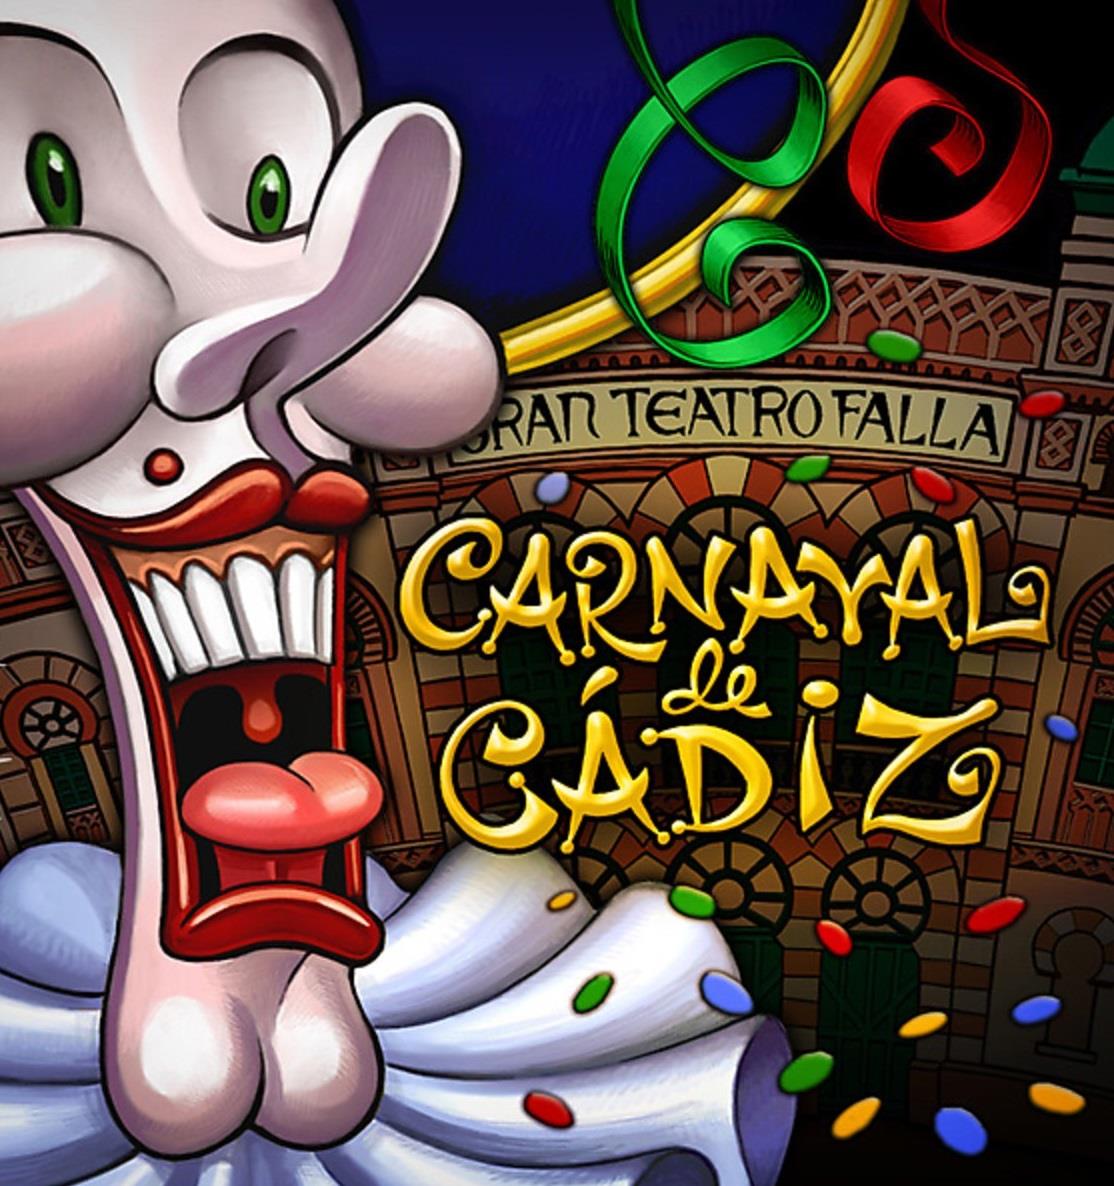 Carnival-Cadiz-Free-Tour-4